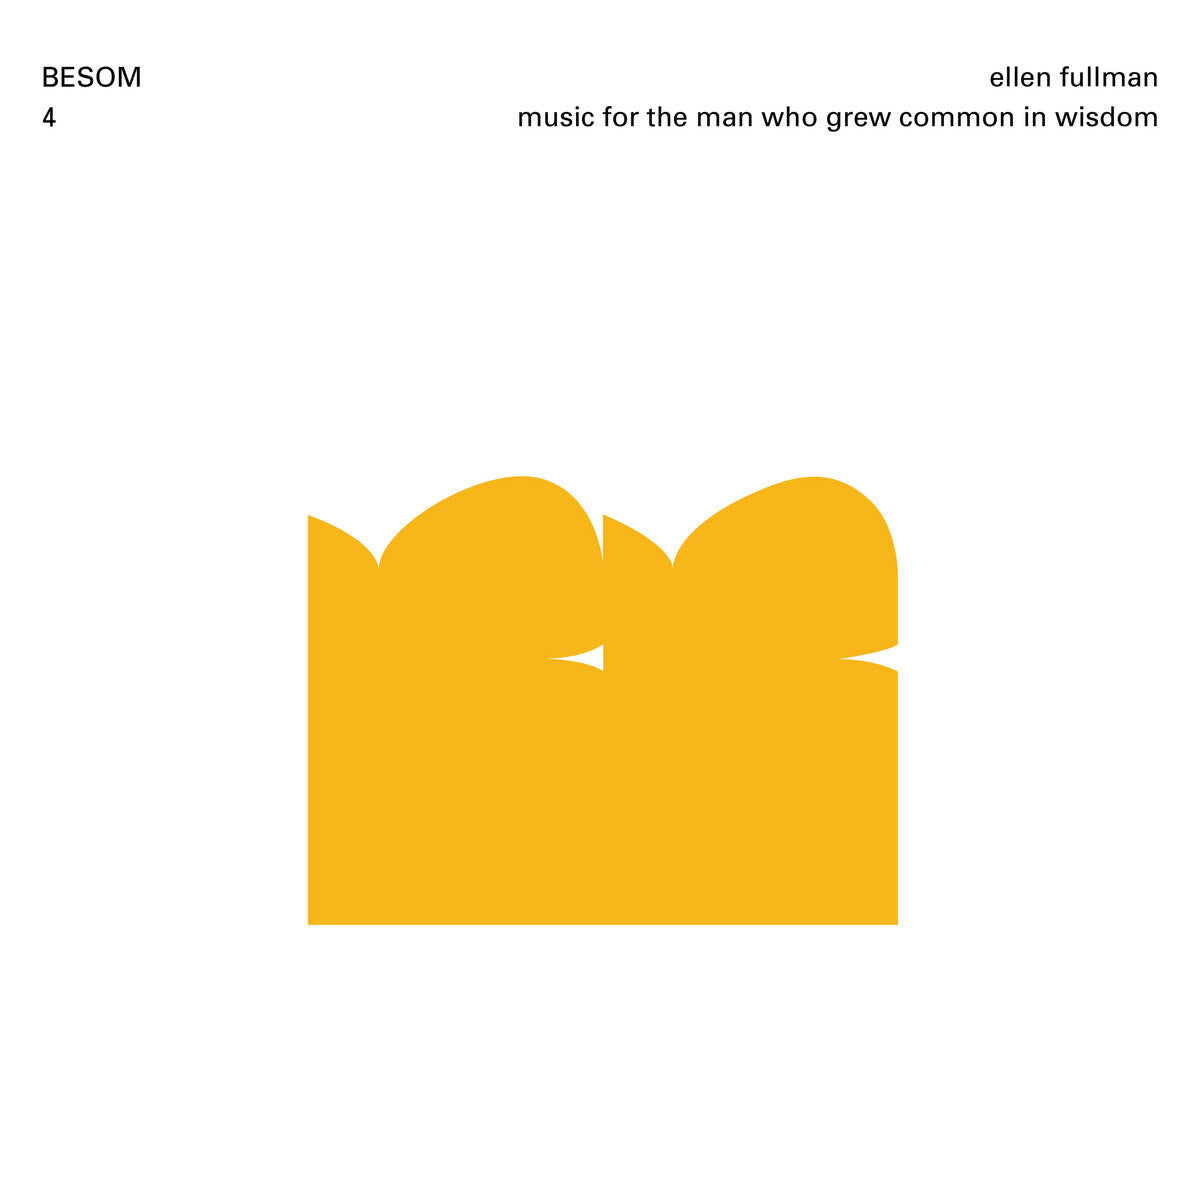 ELLEN FULLMAN - MUSIC FOR THE MAN WHO GREW COMMON IN WISDOM Vinyl LP